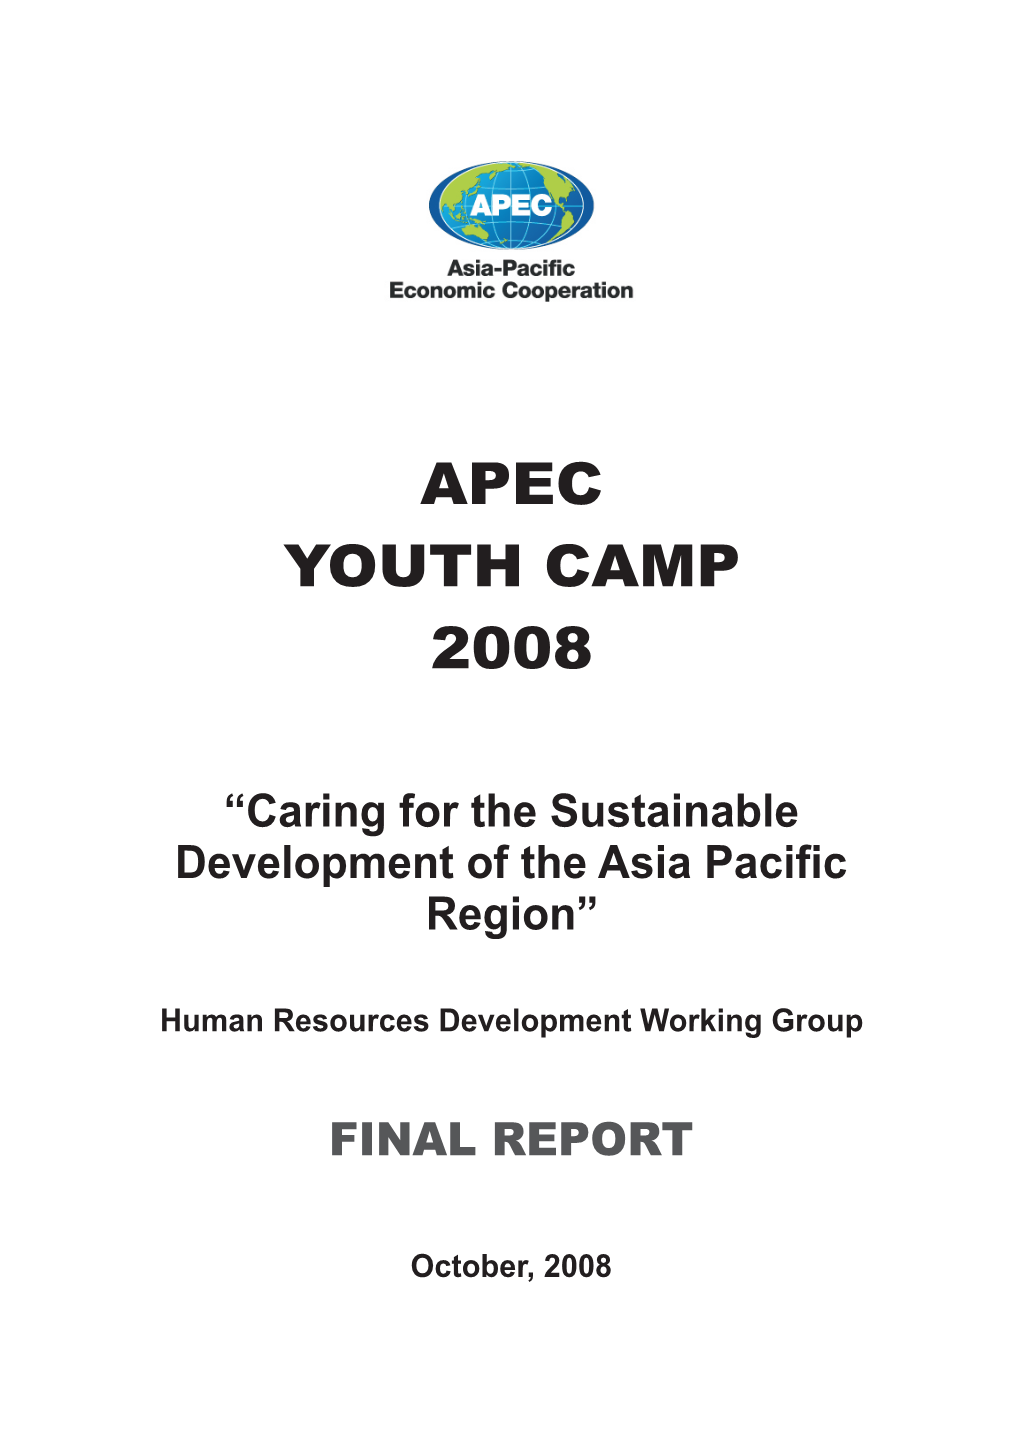 Apec Youth Camp 2008